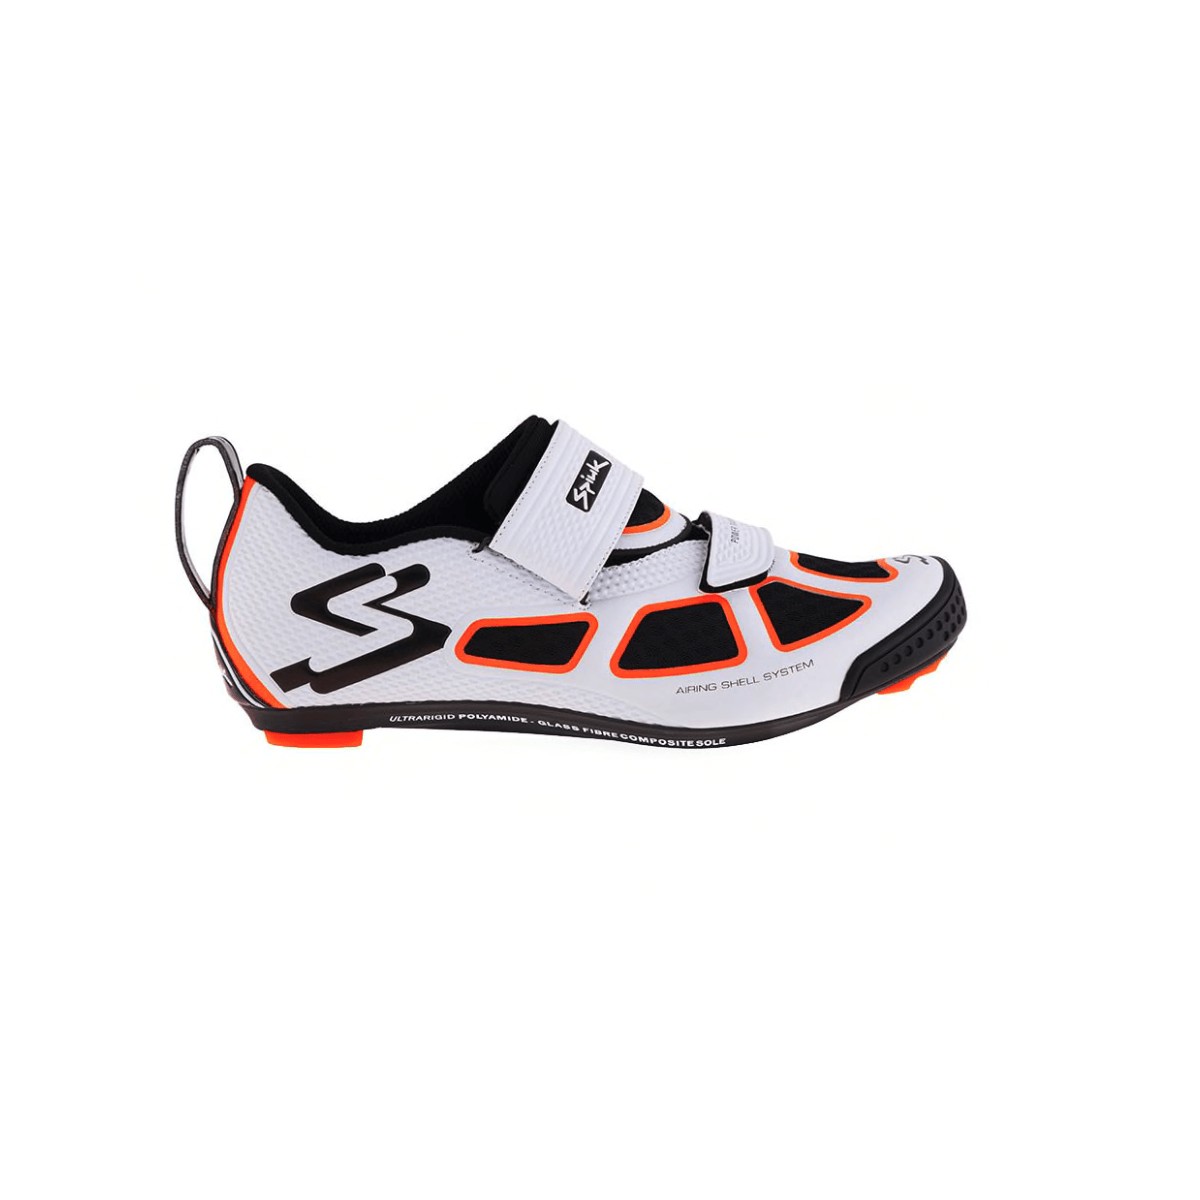 Chaussures homme Spiuk Trivium Blanc Orange, Taille 48 - EUR